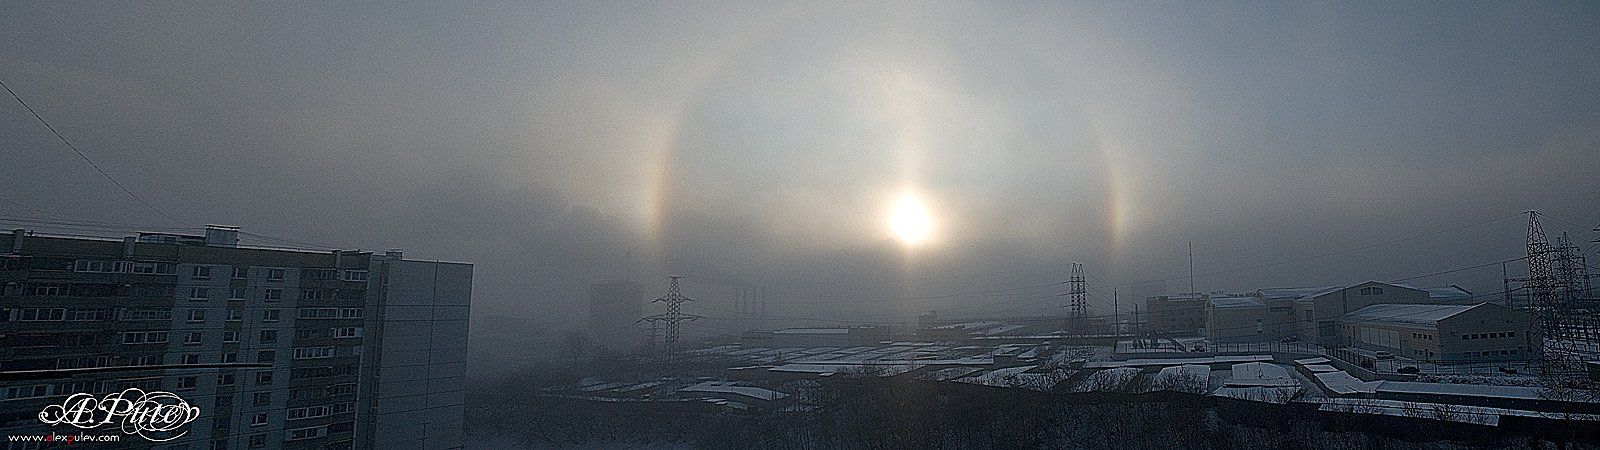 гало,halo,зима,оптическое явление,панорама, Александр Путев